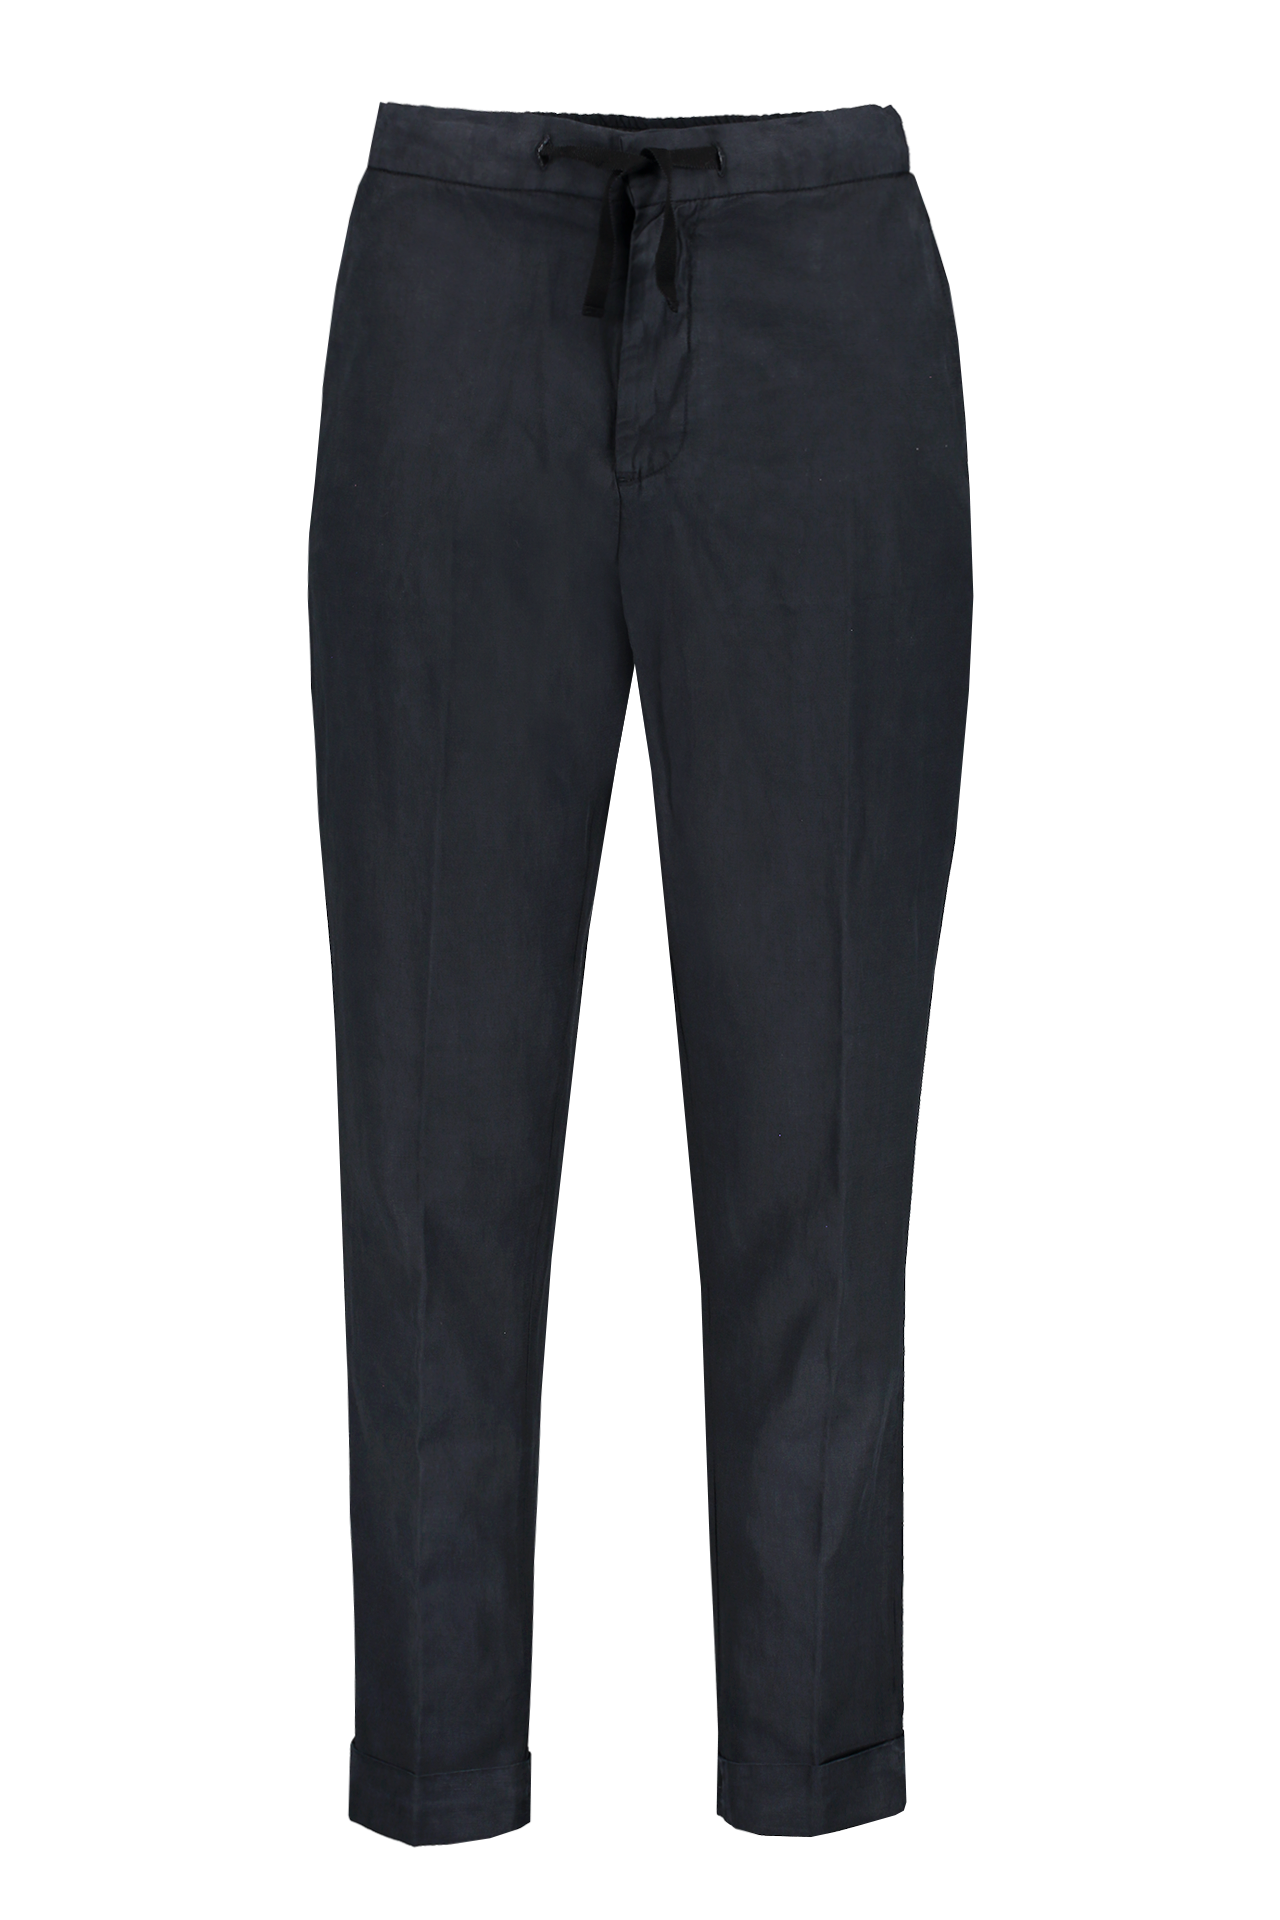 Slim Stretch Mercerised Cotton Pants Navy Dark - Calibre Menswear